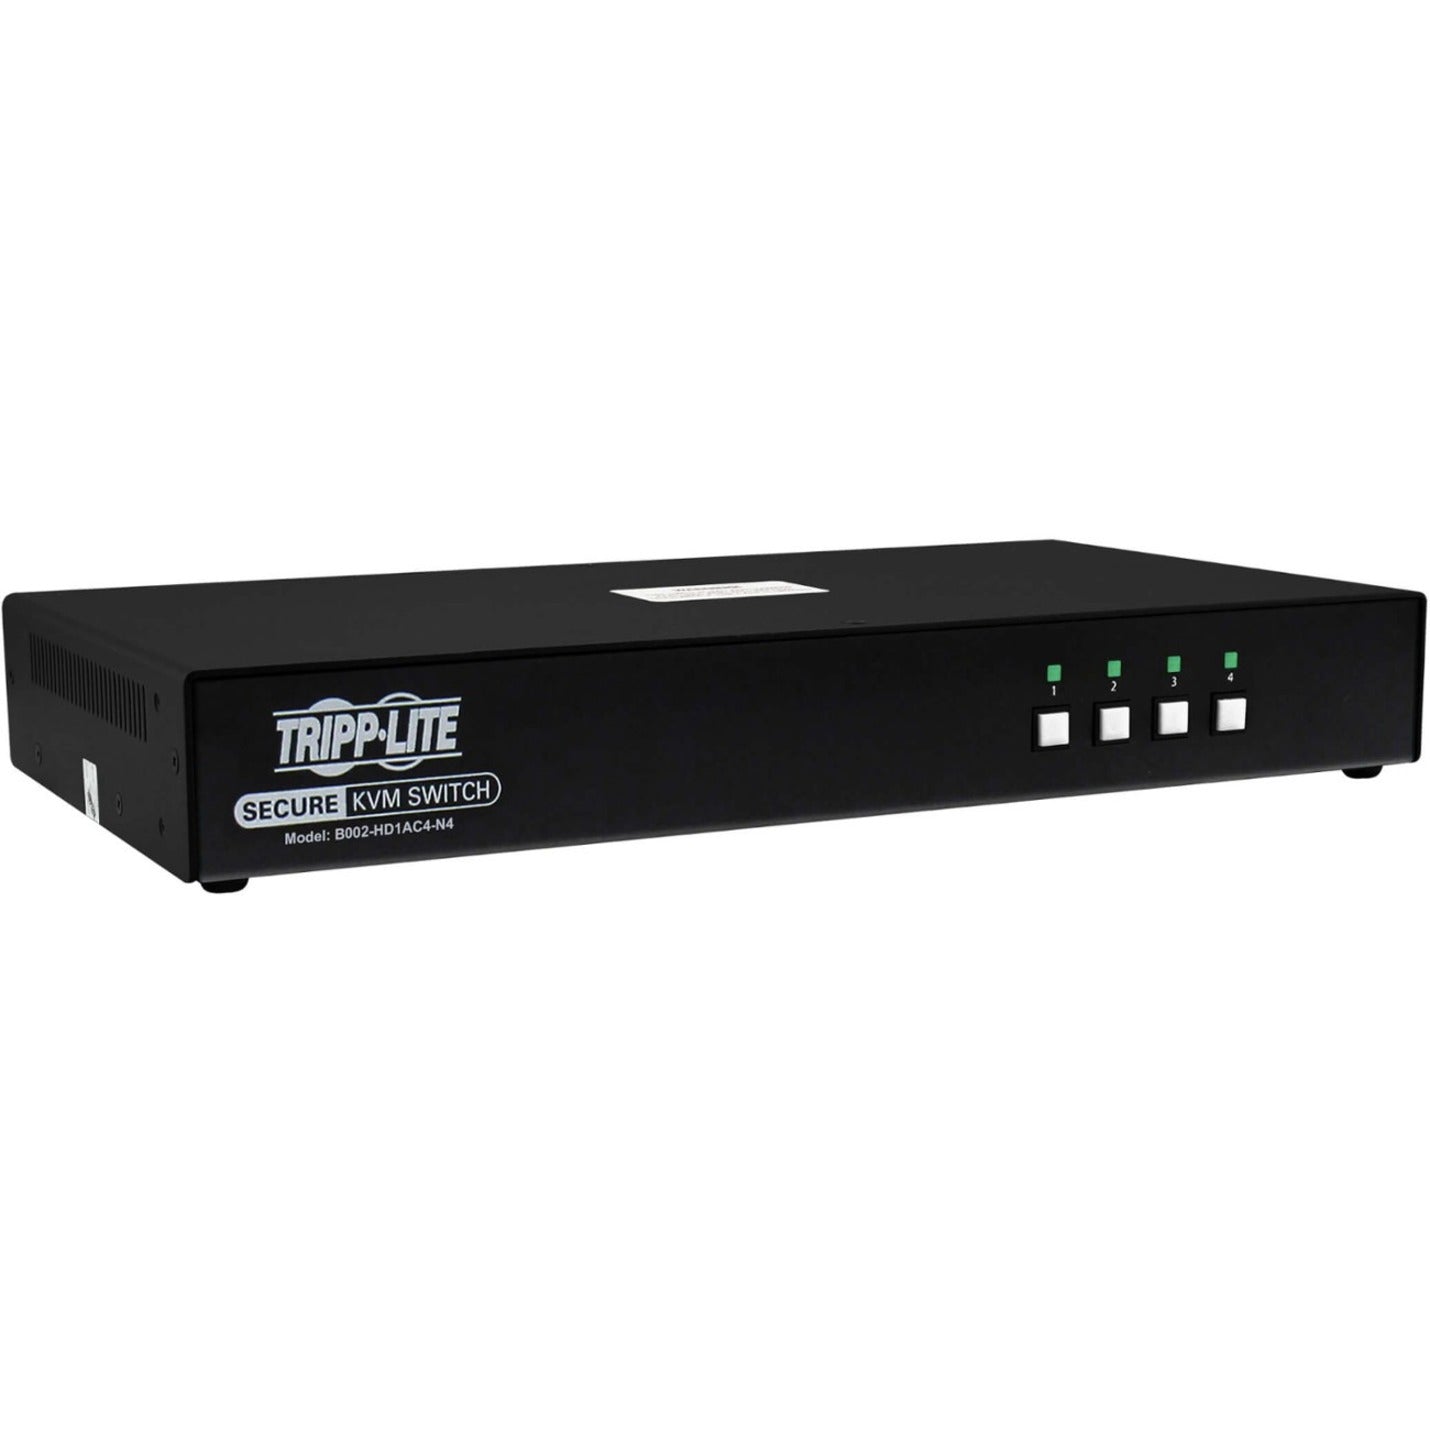 Tripp Lite B002-HD1AC4-N4 Secure KVM Switch, 4-Port, Single Head, DP to HDMI (X4), 4K, NIAP PP4.0, Audio